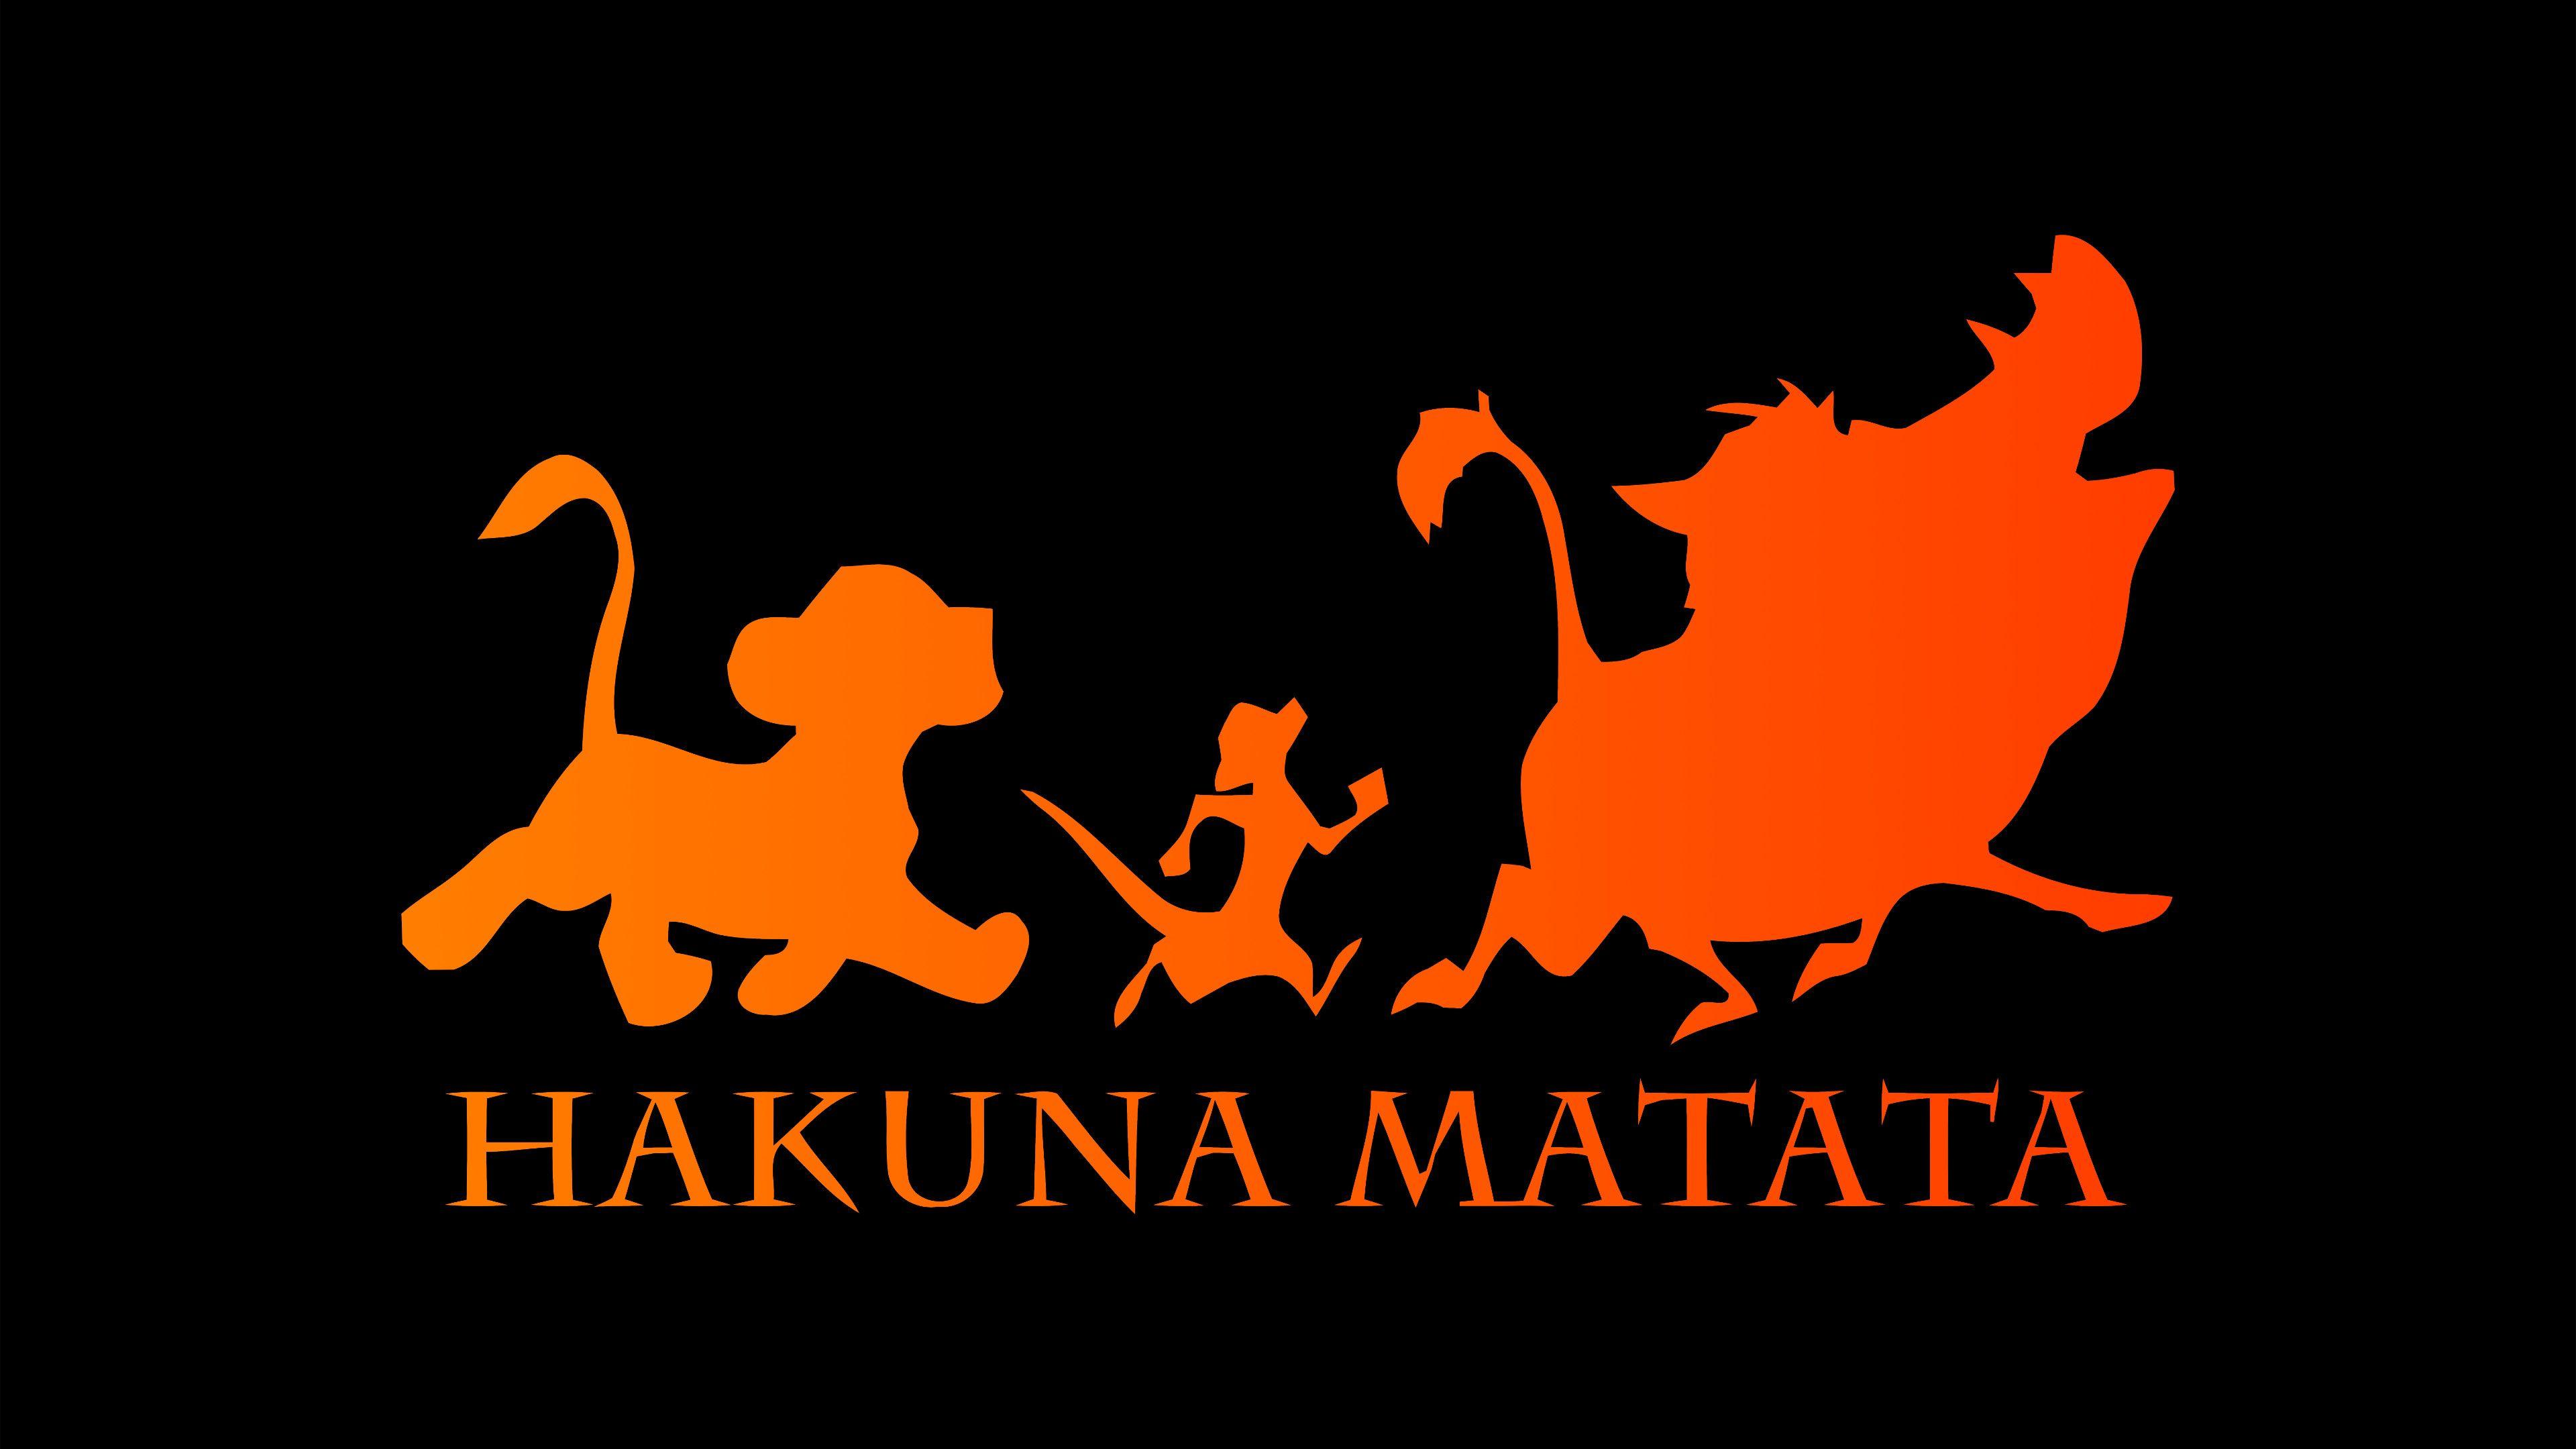 Download 2560x1440 Disney Hakuna Matata Characters Wallpaper  Wallpapers com